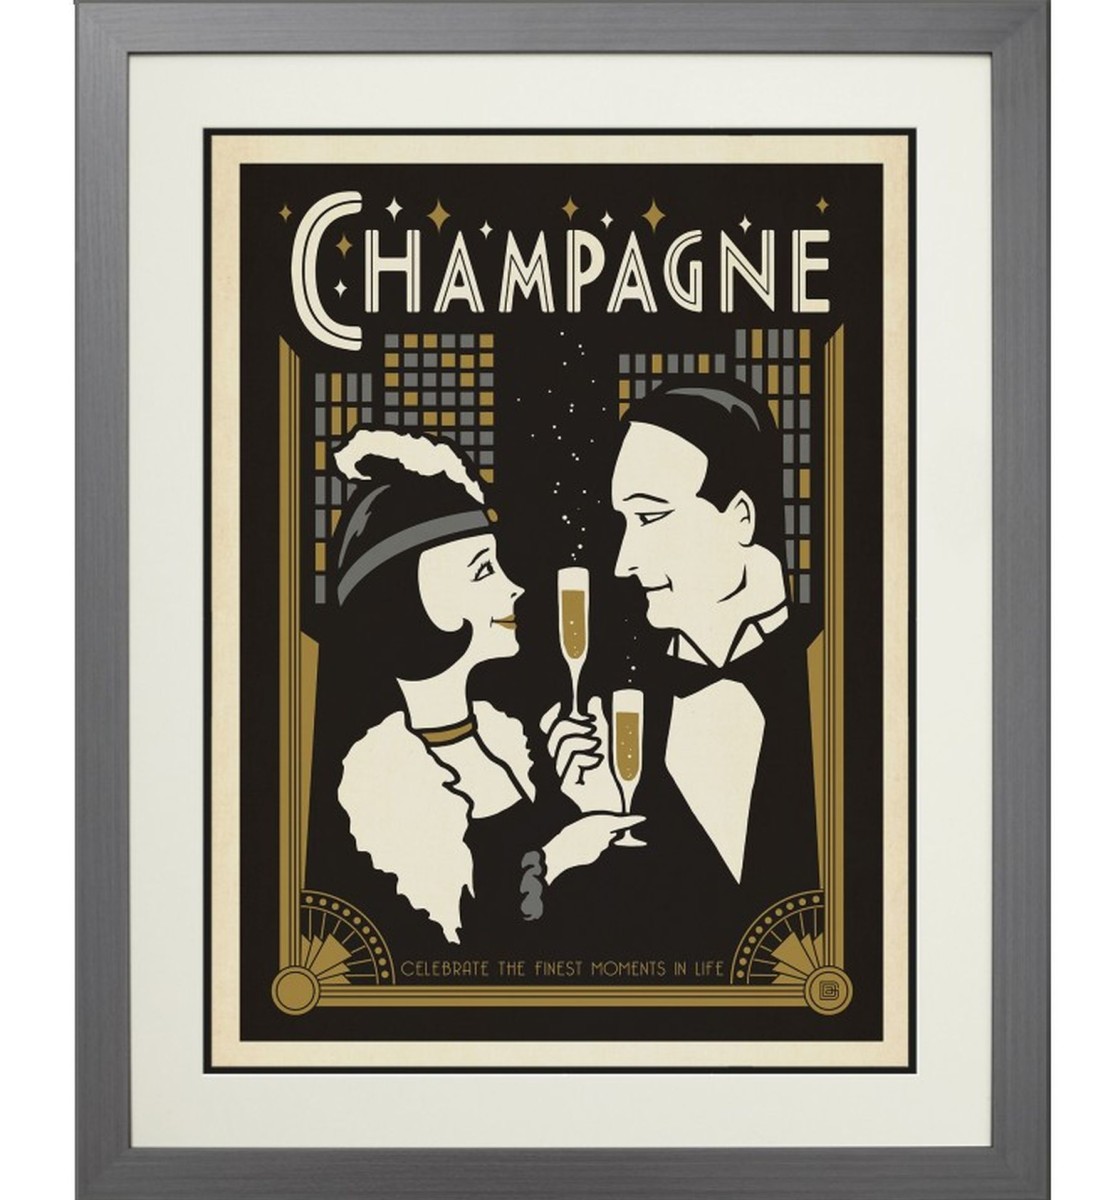 Champagne, Art Deco Style By Derek Anderson, Joel Anderson, 2016 